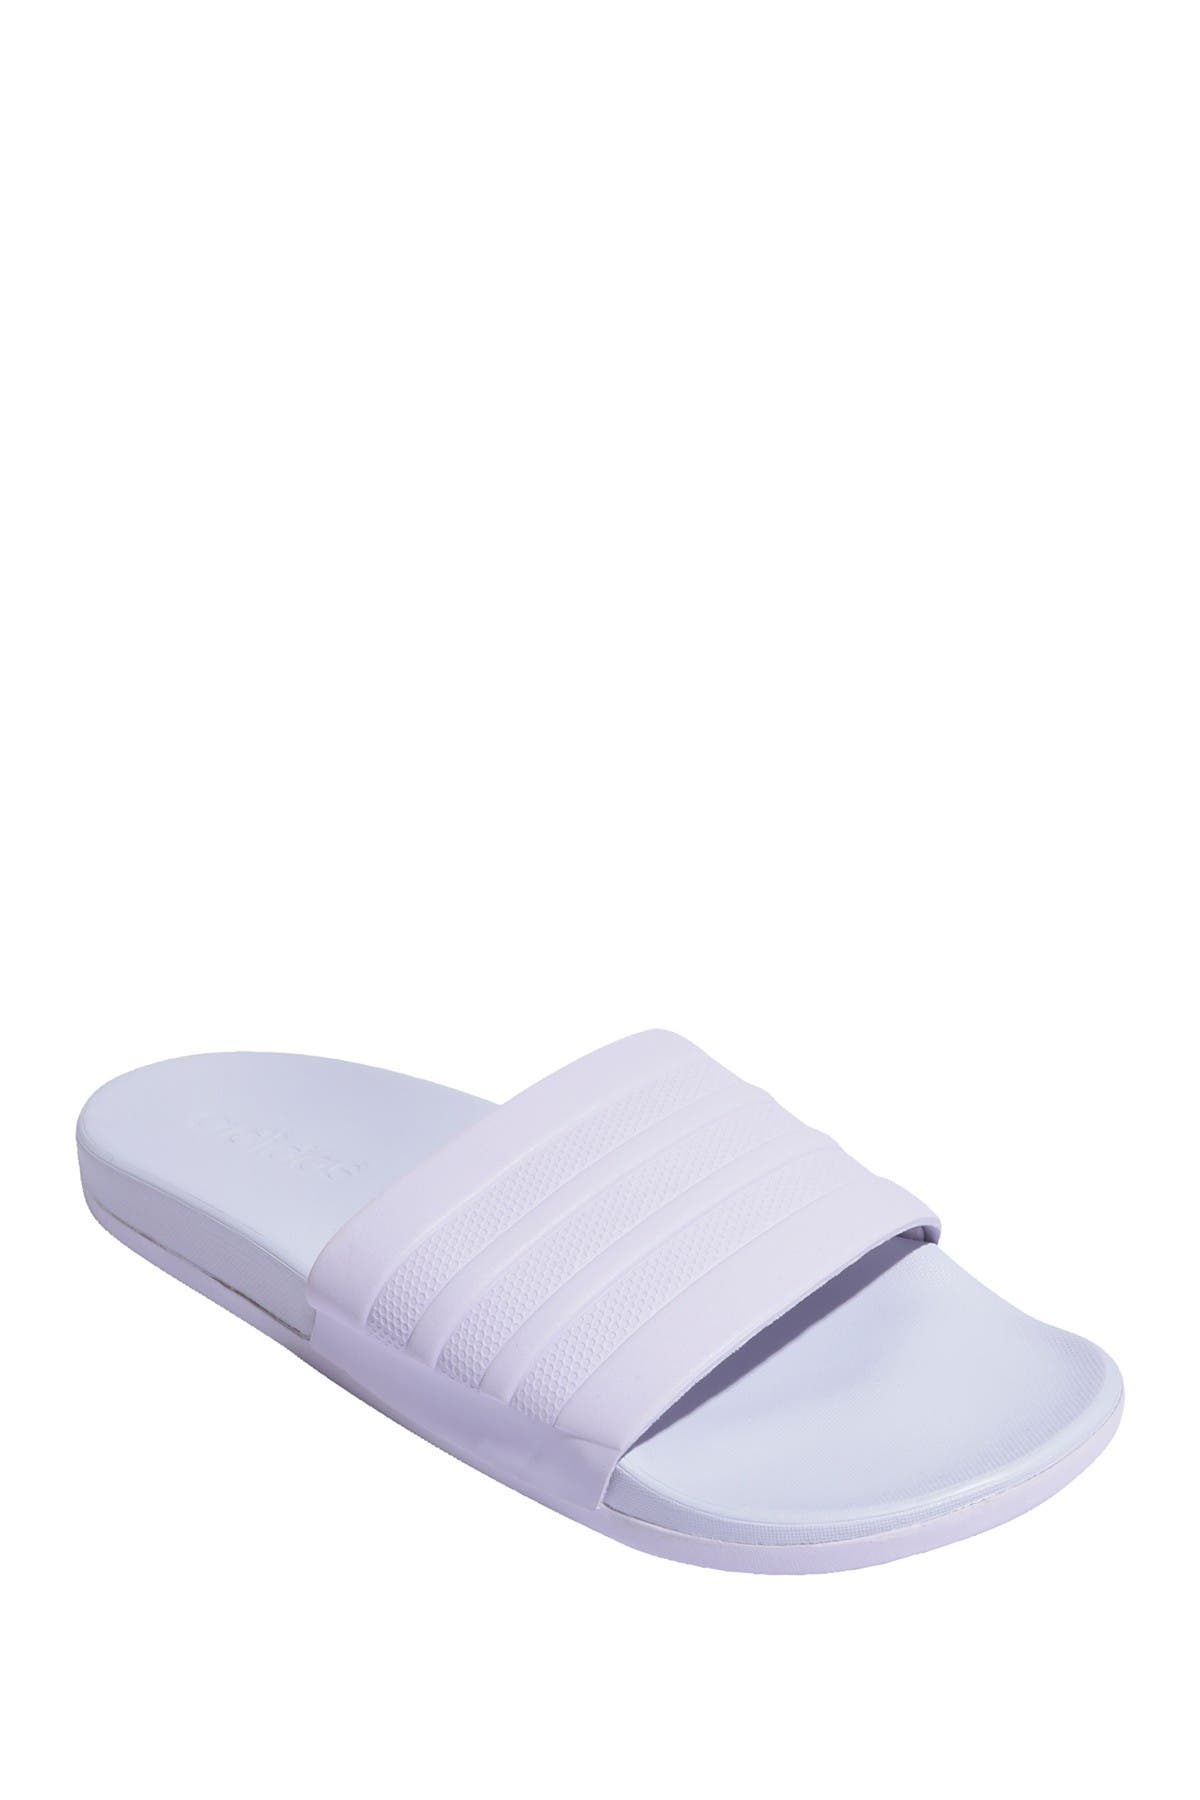 adidas adilette comfort slides white